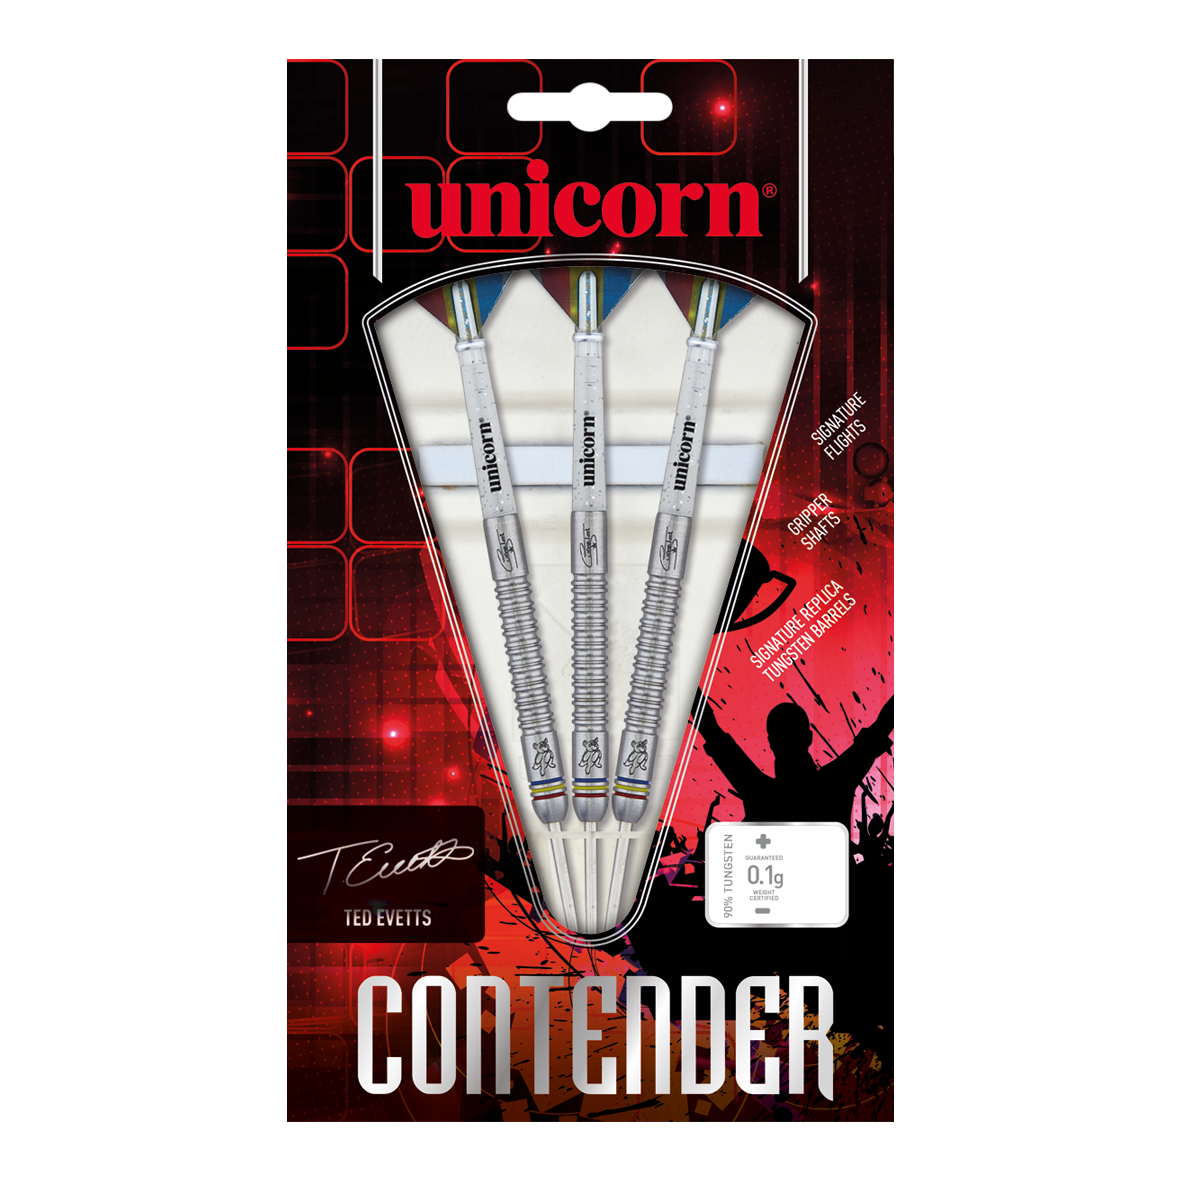 Unicorn Contender Ted Evetts Phase 2 Steeldarts - 23g